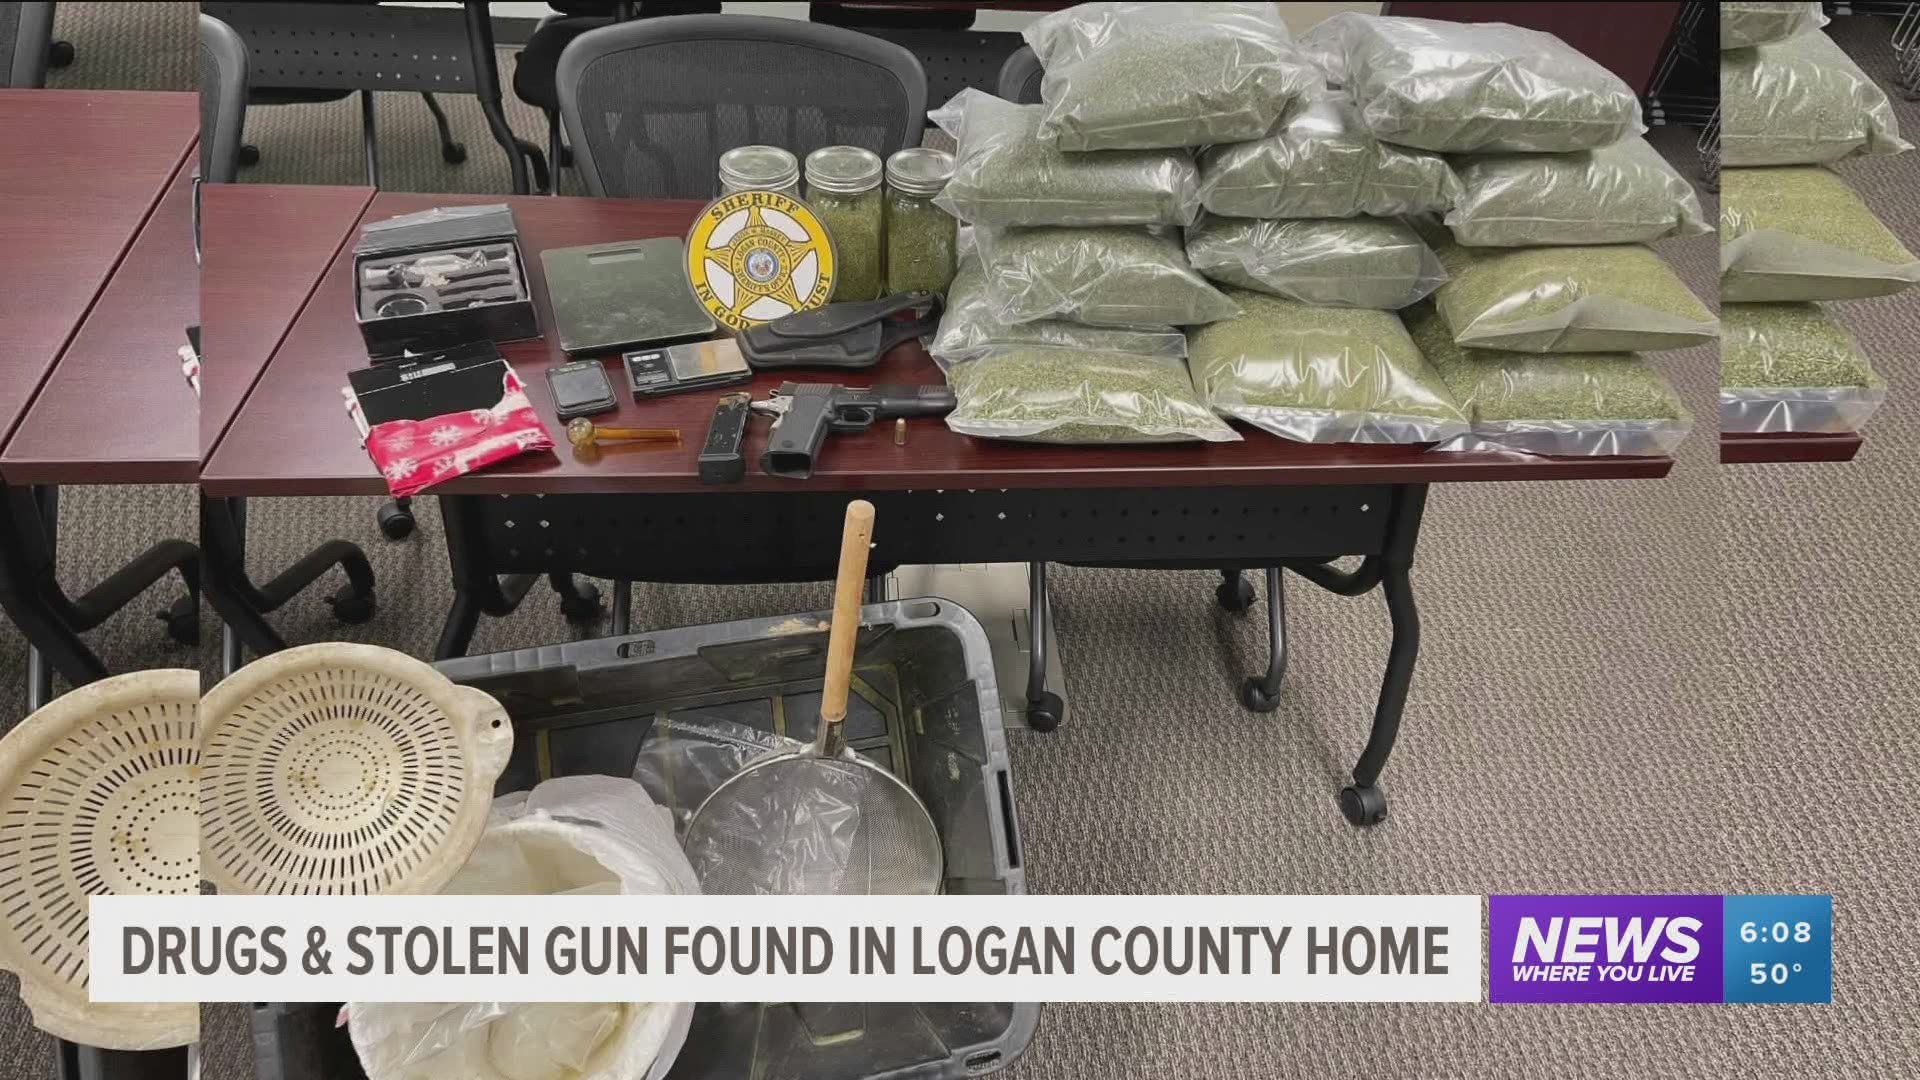 Drugs and stolen gun found in Logan County home, arrest made